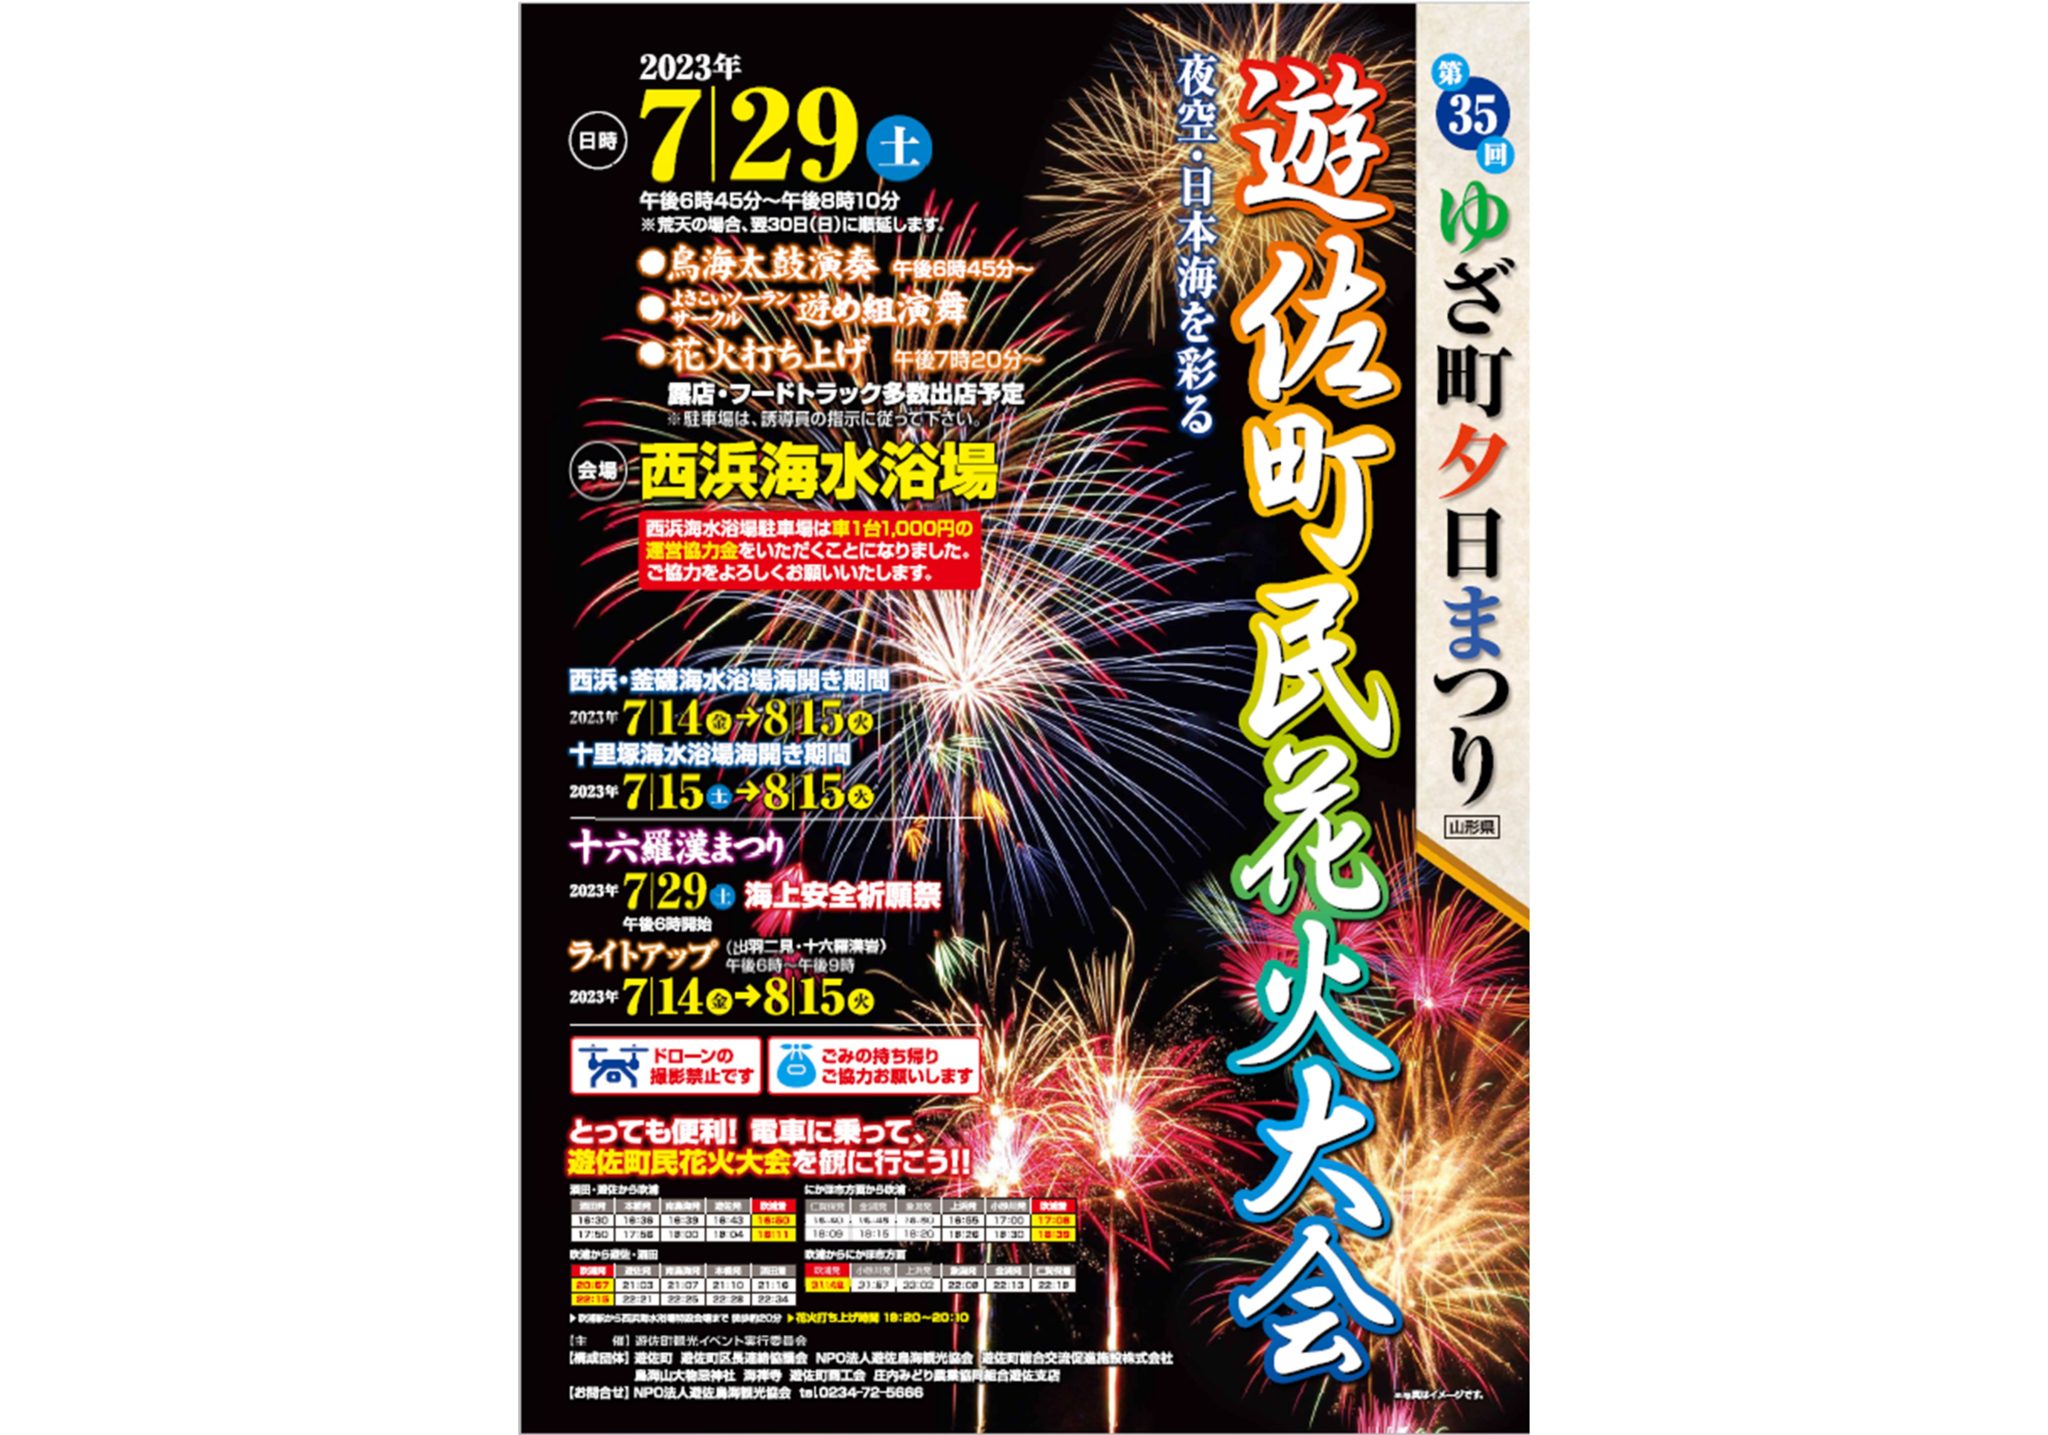 Yuza Town Sunset Festival & Fireworks